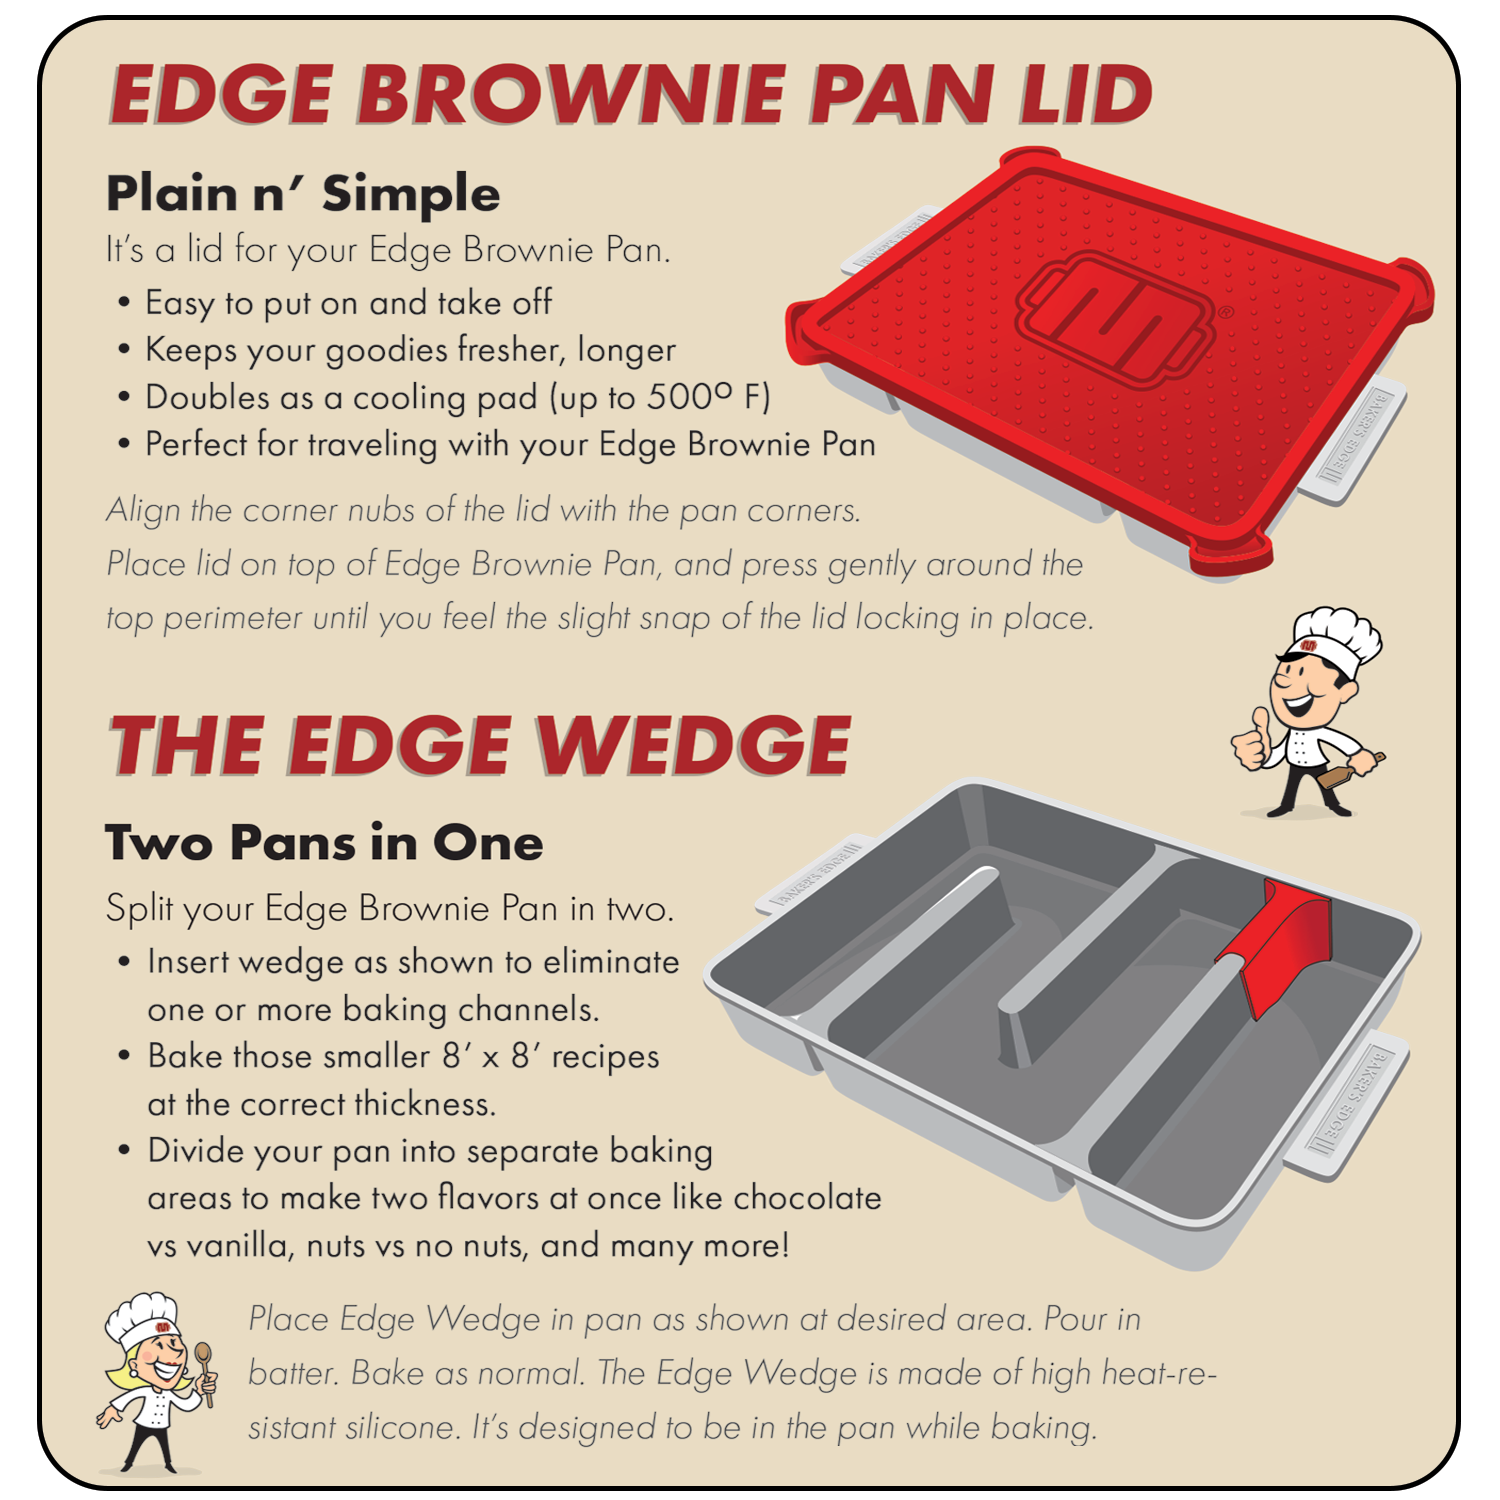  Customer reviews: Baker's Edge Brownie Pan, The Original All  Edges Brownie Pan for Baking  Premium Doble Nonstick Coating, Heavy Gauge  Cast Aluminum Construction, Rectangular 9x12” Size Baking Pan - US